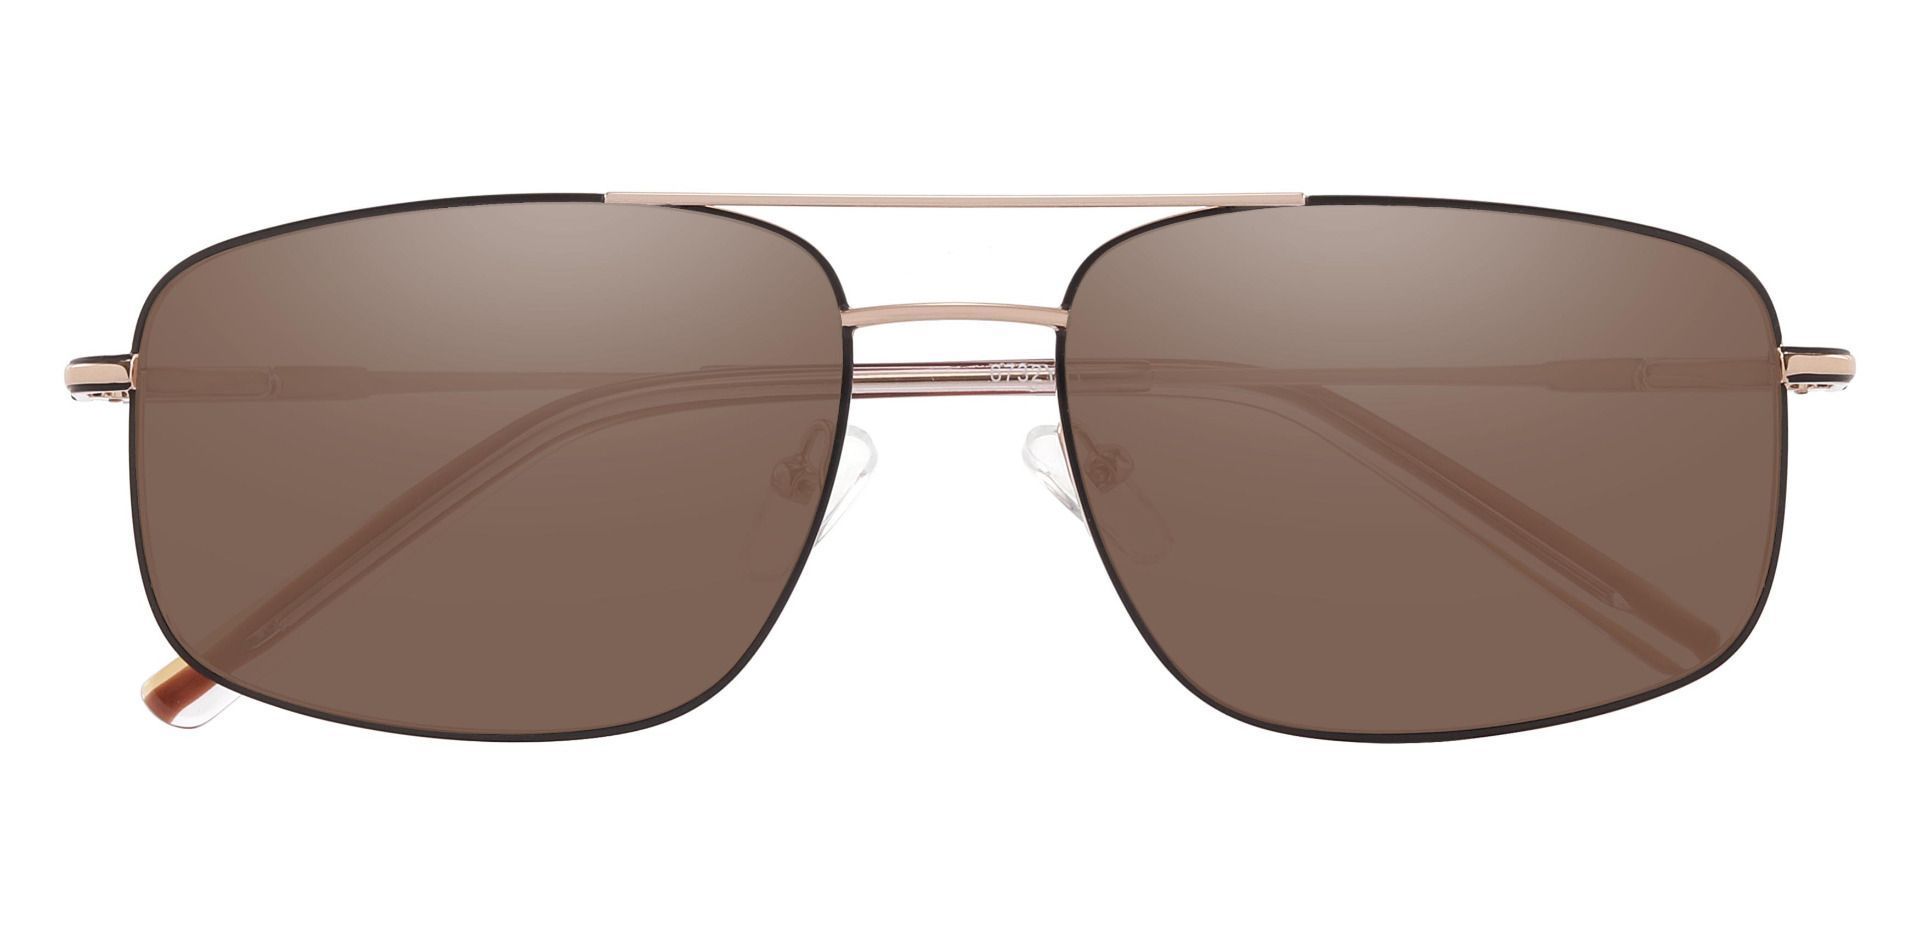 Turner Aviator Prescription Sunglasses - Gold Frame With Brown Lenses